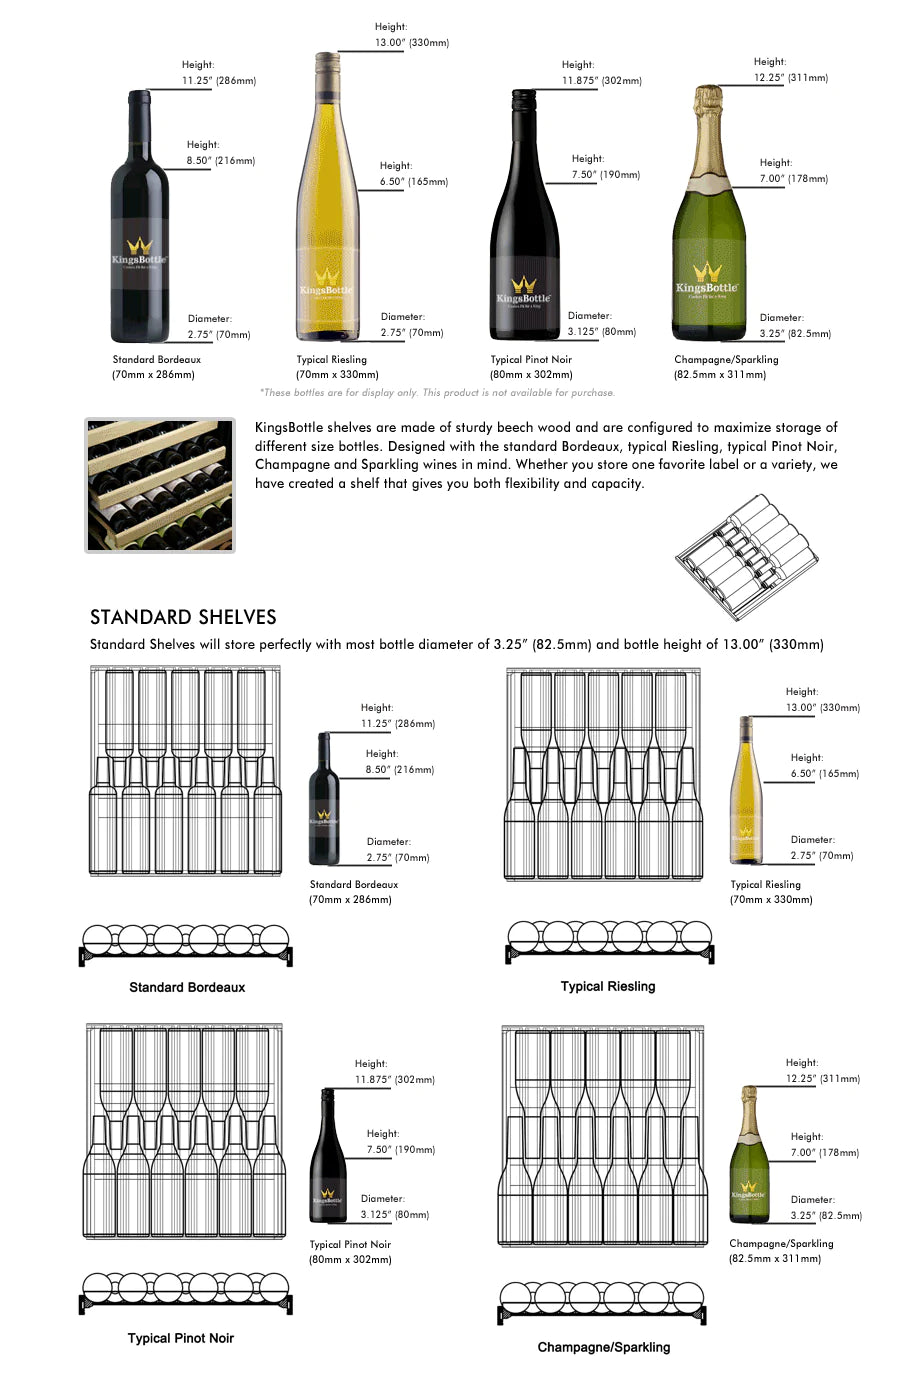 KingsBottle 100 Bottle Upright Dual Zone Wine Fridge For Home KBU100DX..